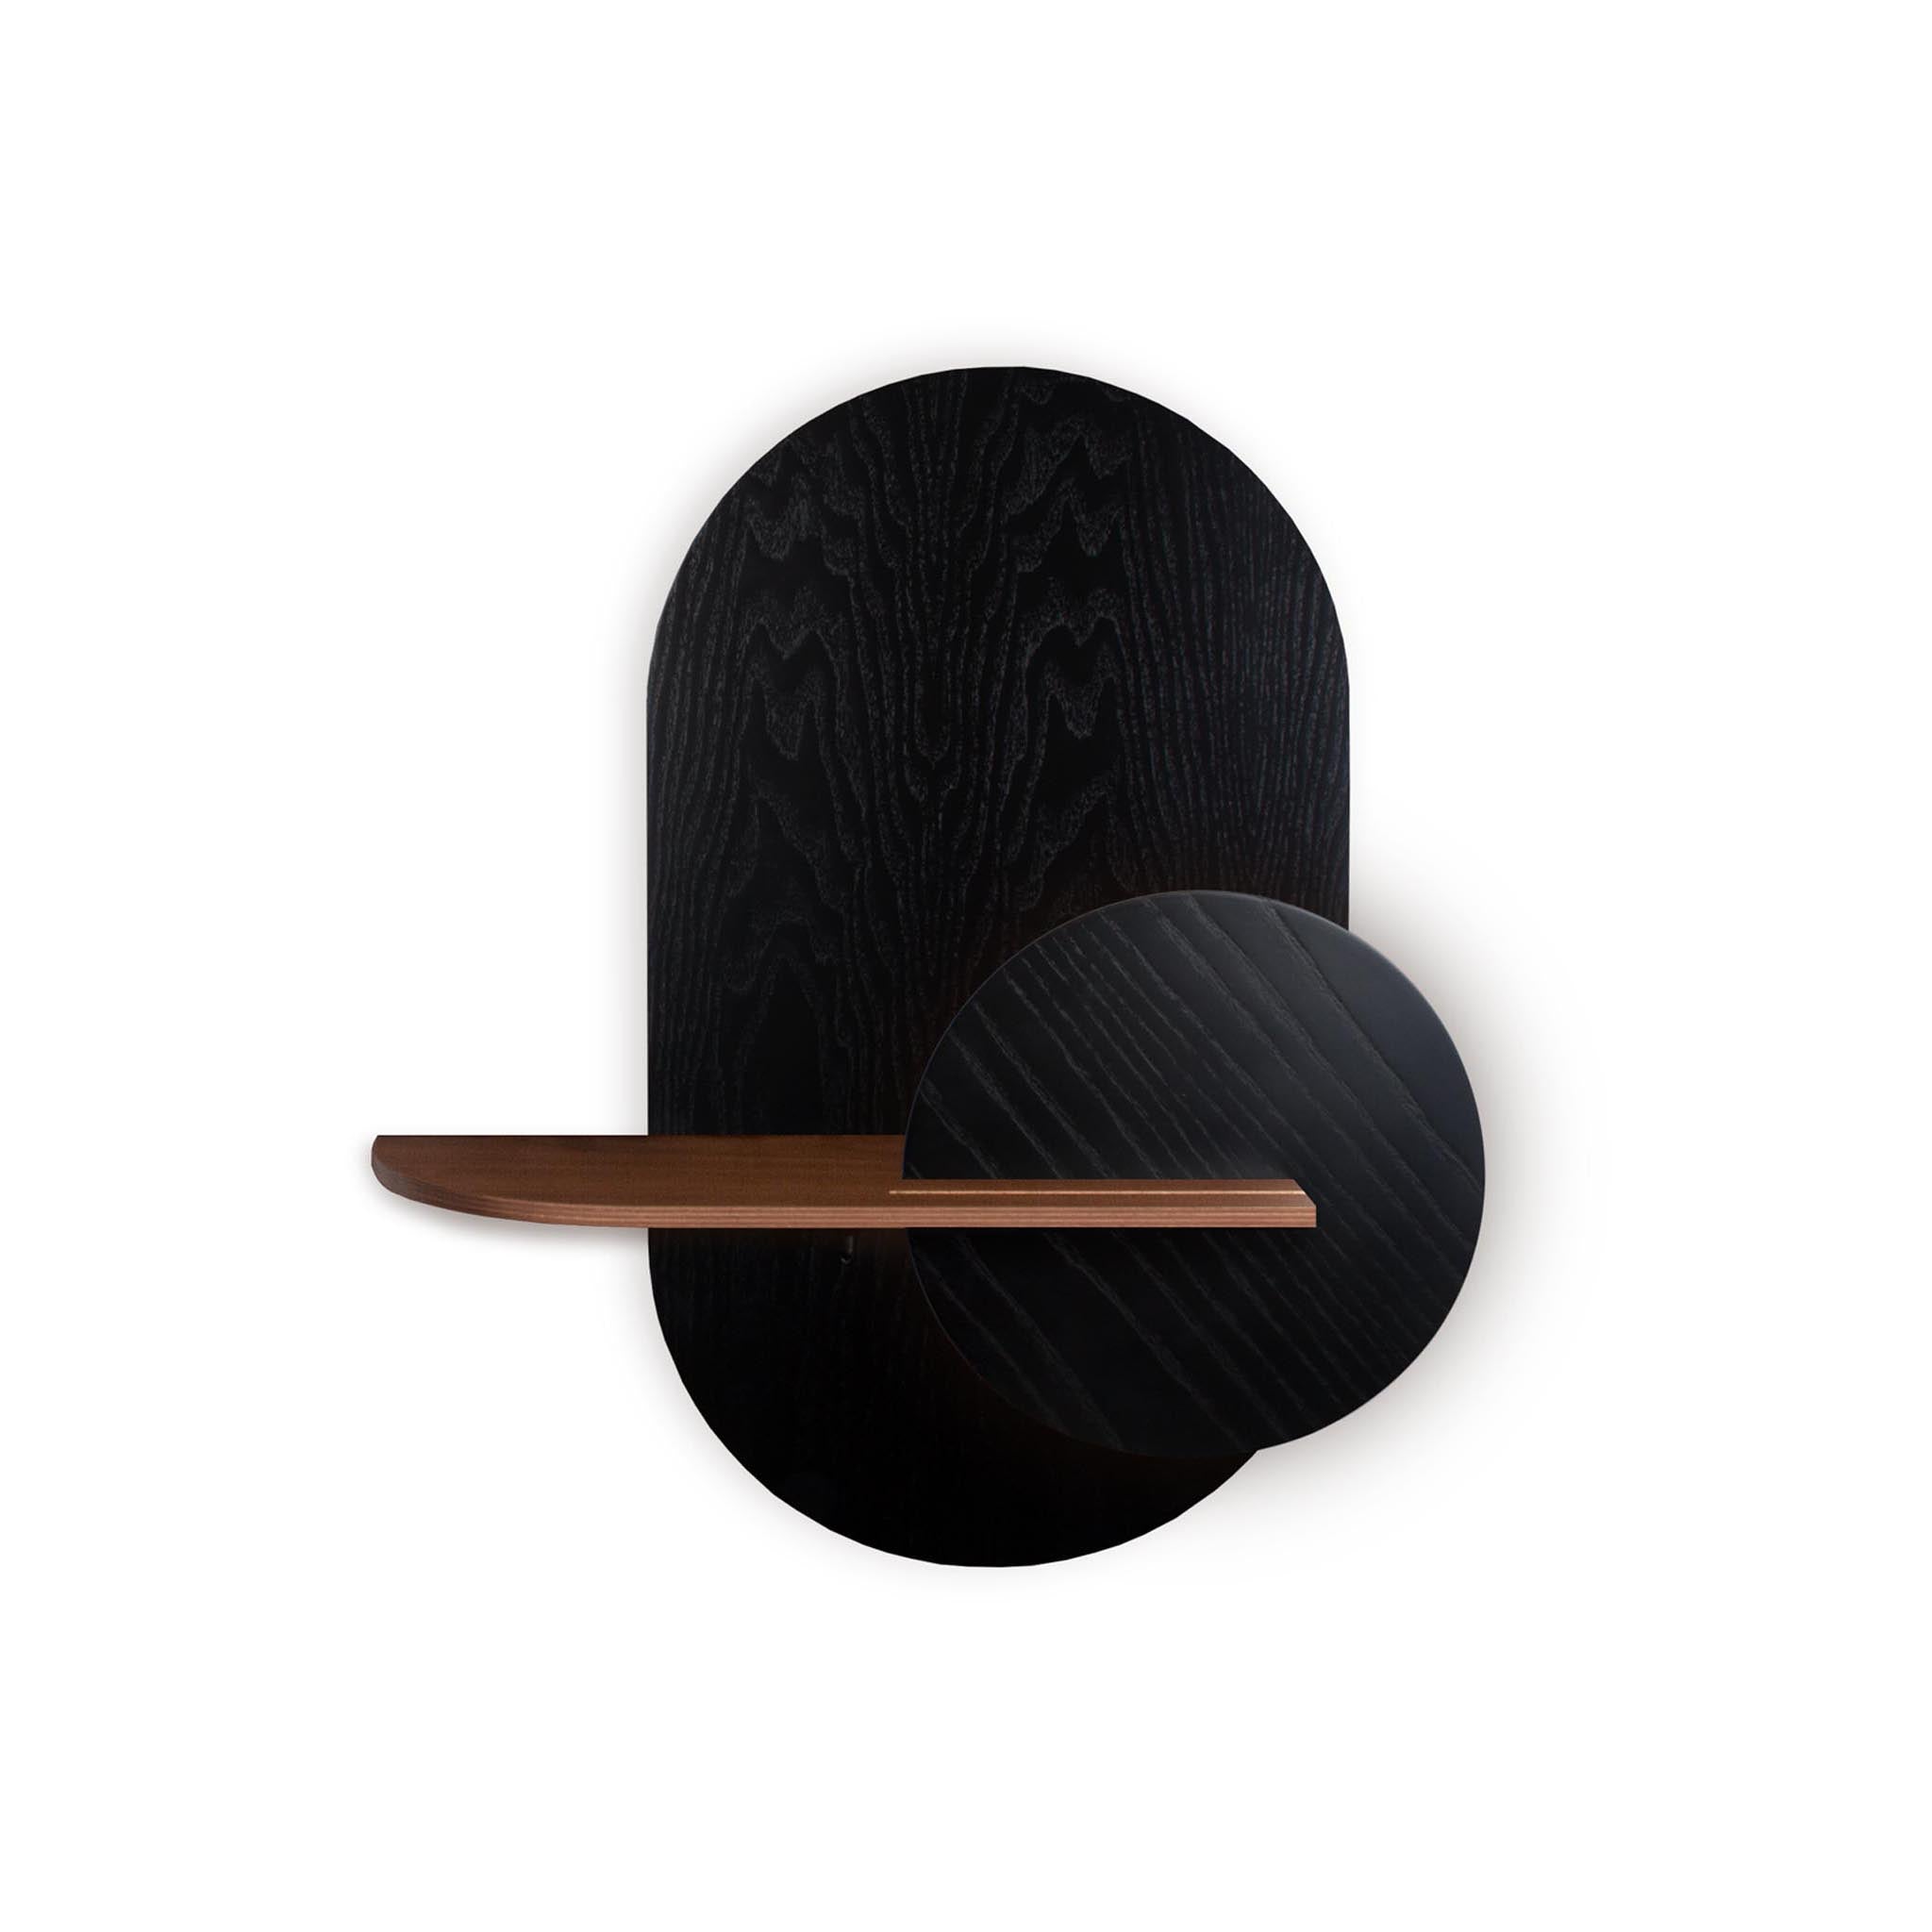 Alba wall shelf · Black oval